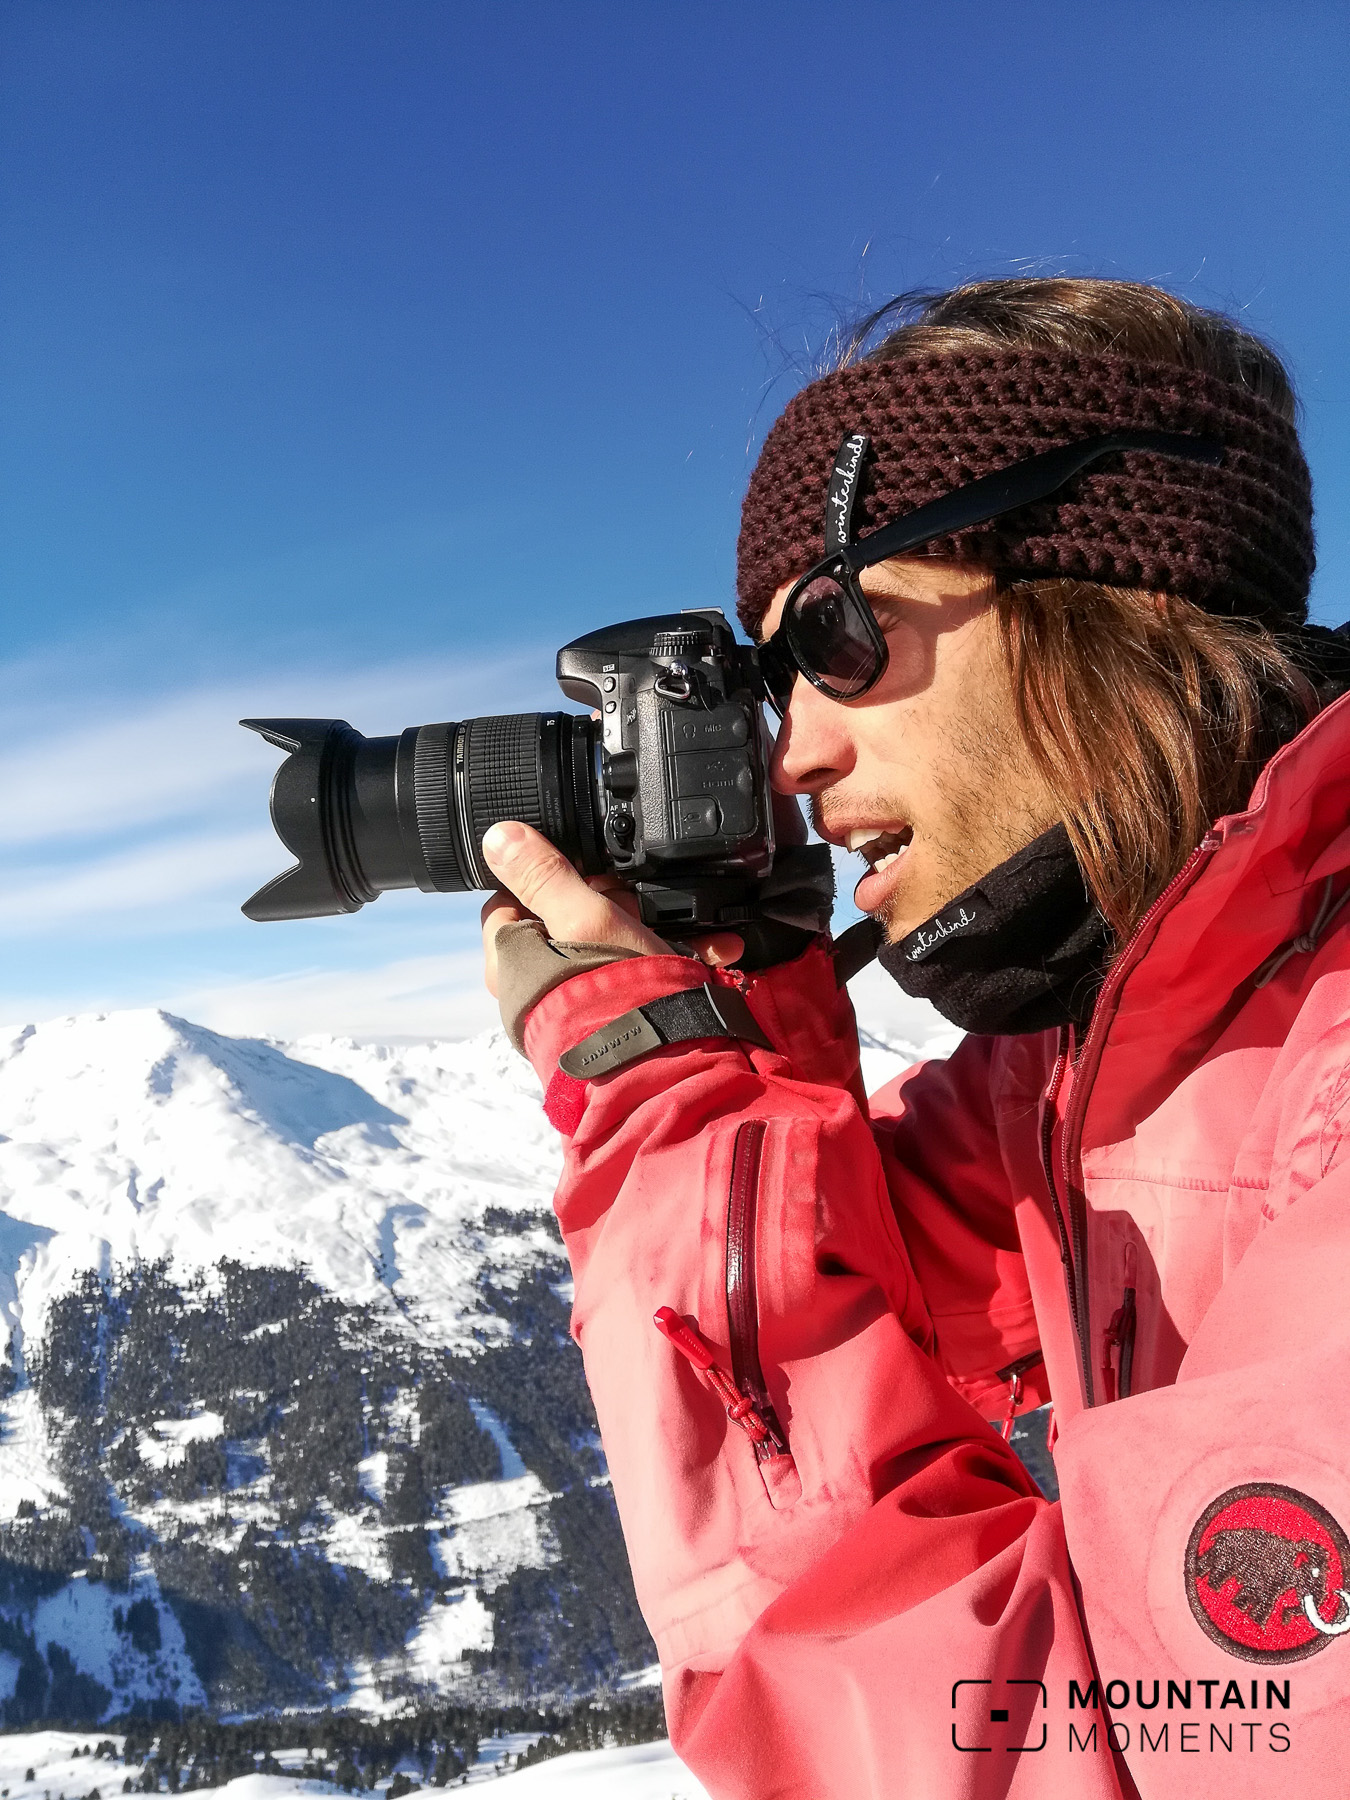 Objektive zum Berge fotografieren: Tipps zur Objektivwahl